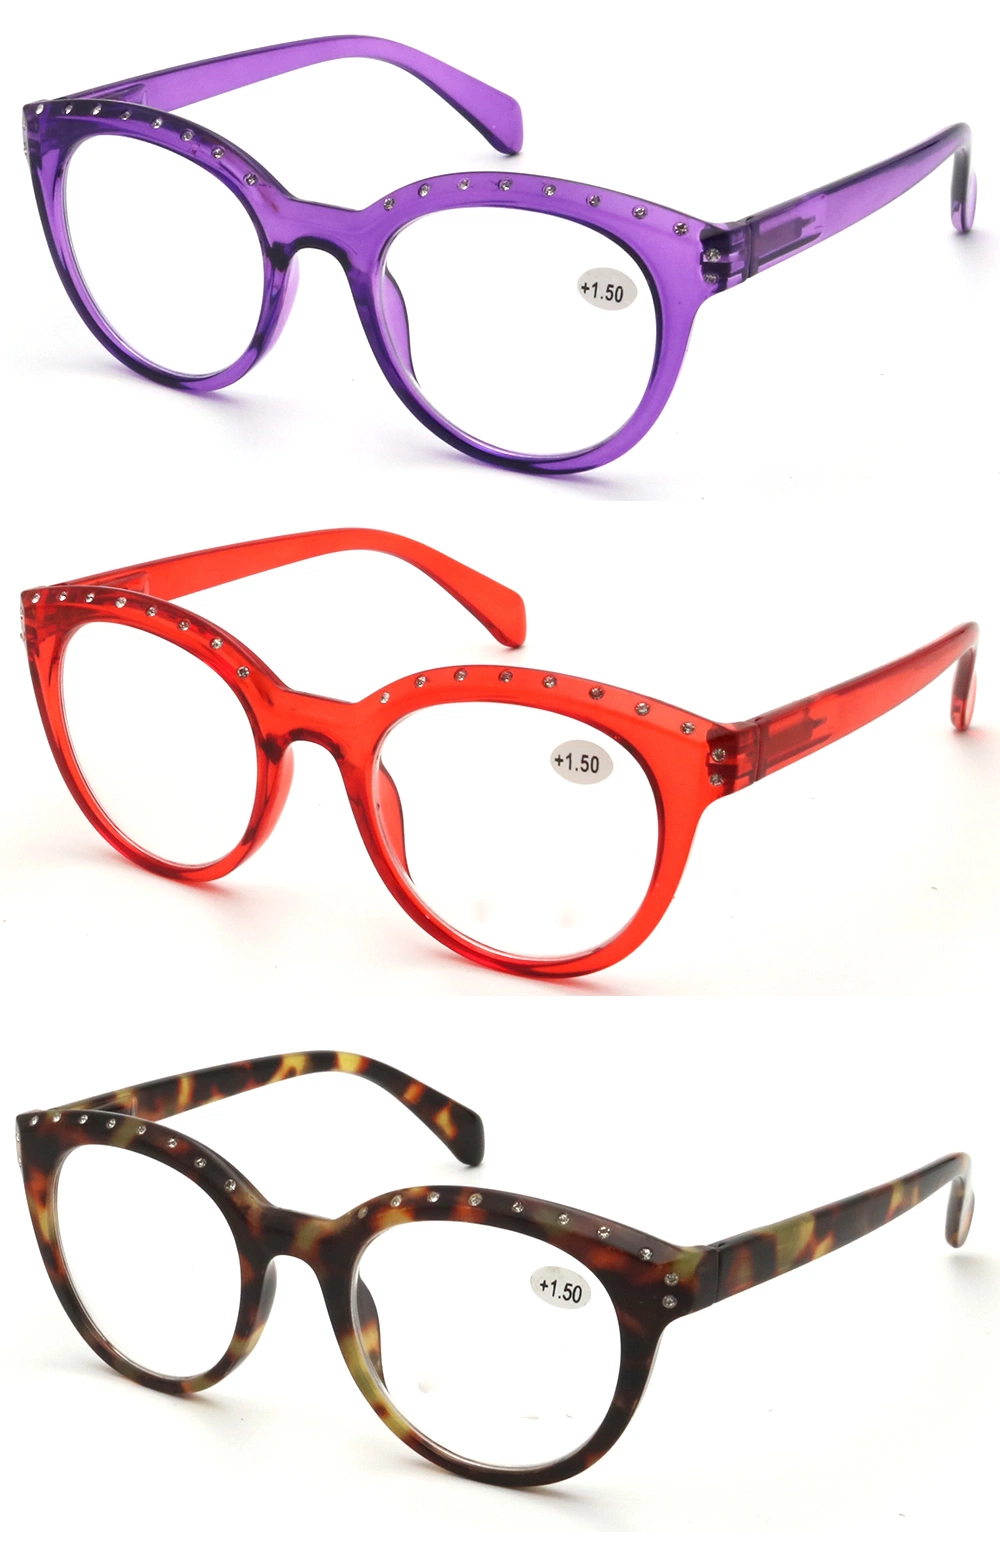 Ienjoy Beautify Cat Eye Logo Italy Design Reading Glasses